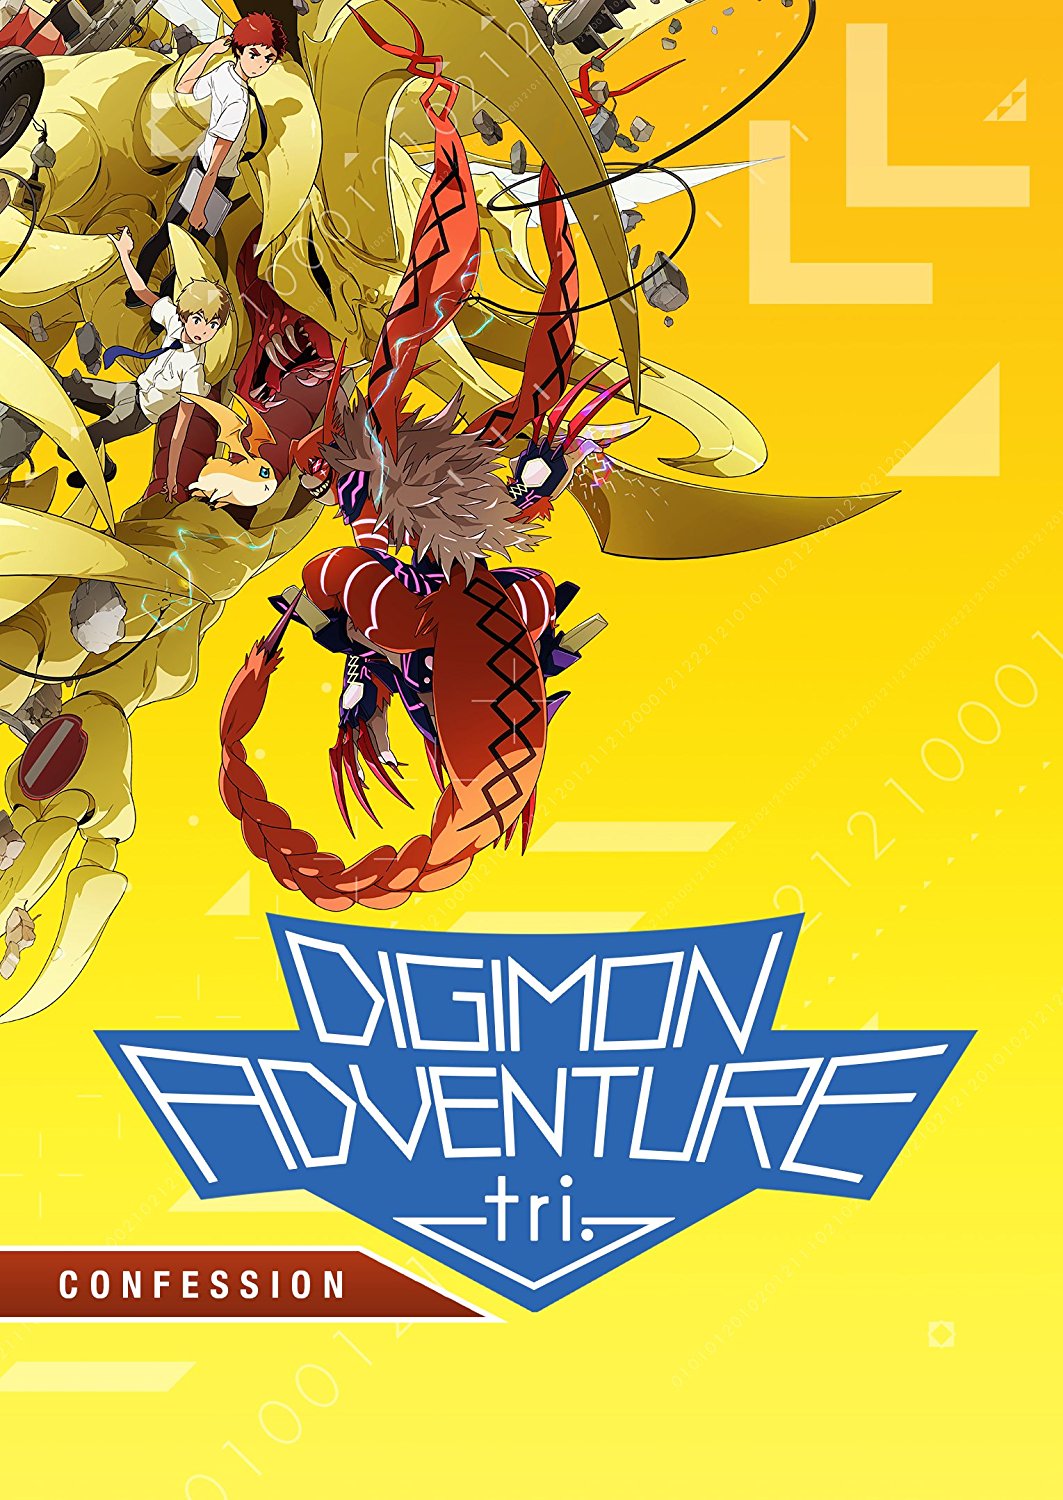 Digimon Adventure tri. Films (English Dub) Digimon Adventure tri